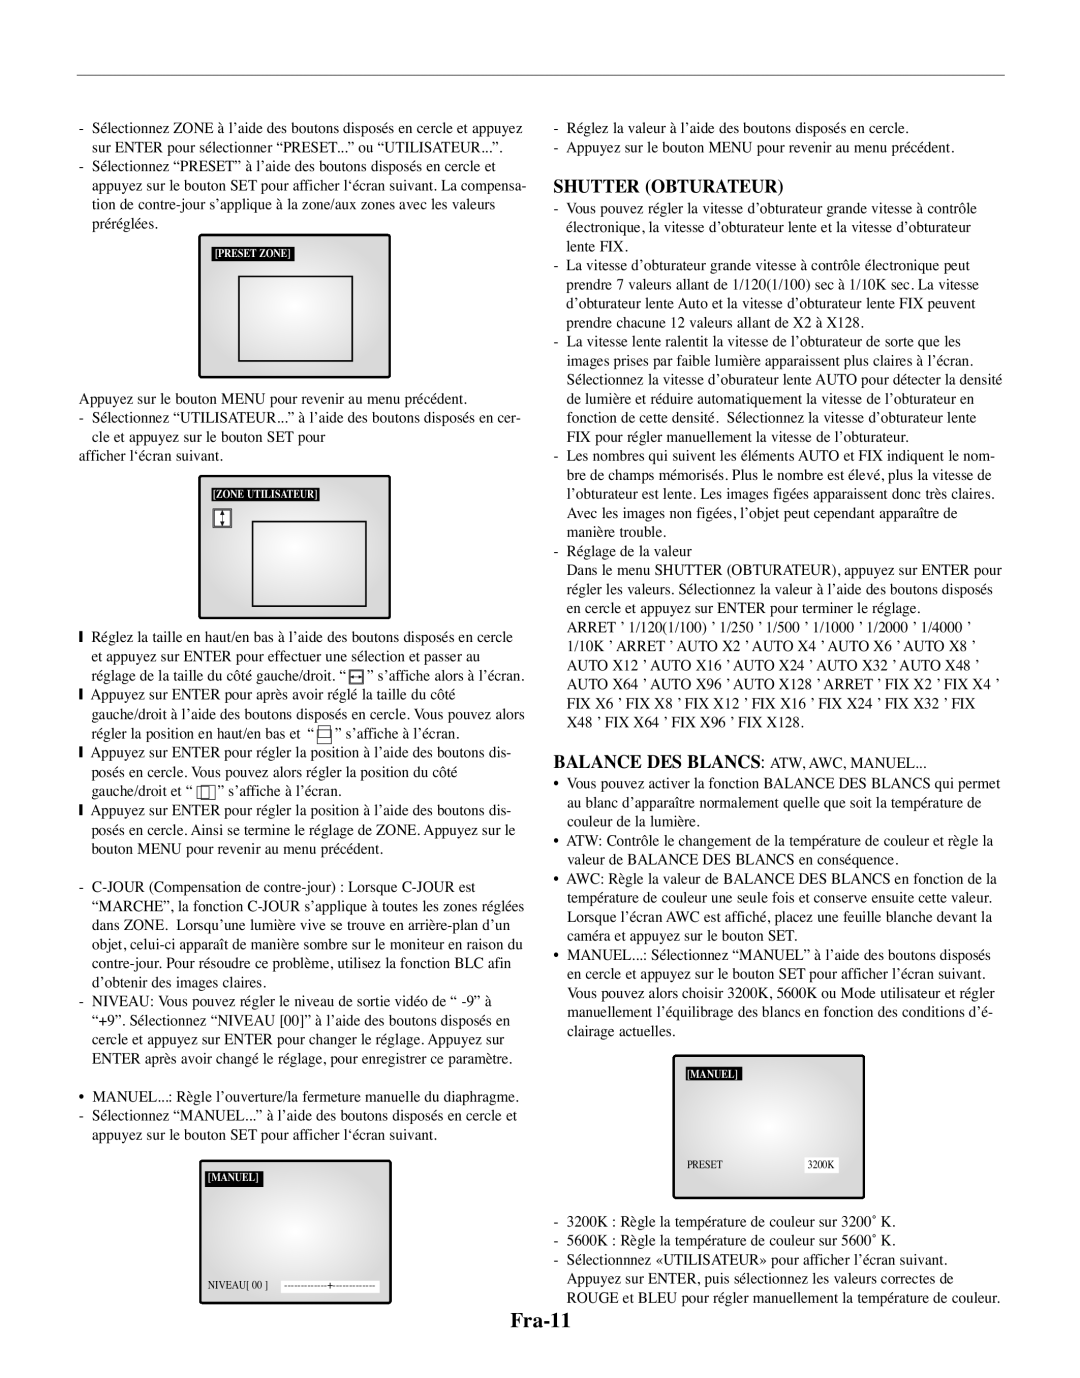 Samsung SMO-210TRP, SMO-210MP/UMG manual Fra-11, Shutter Obturateur 